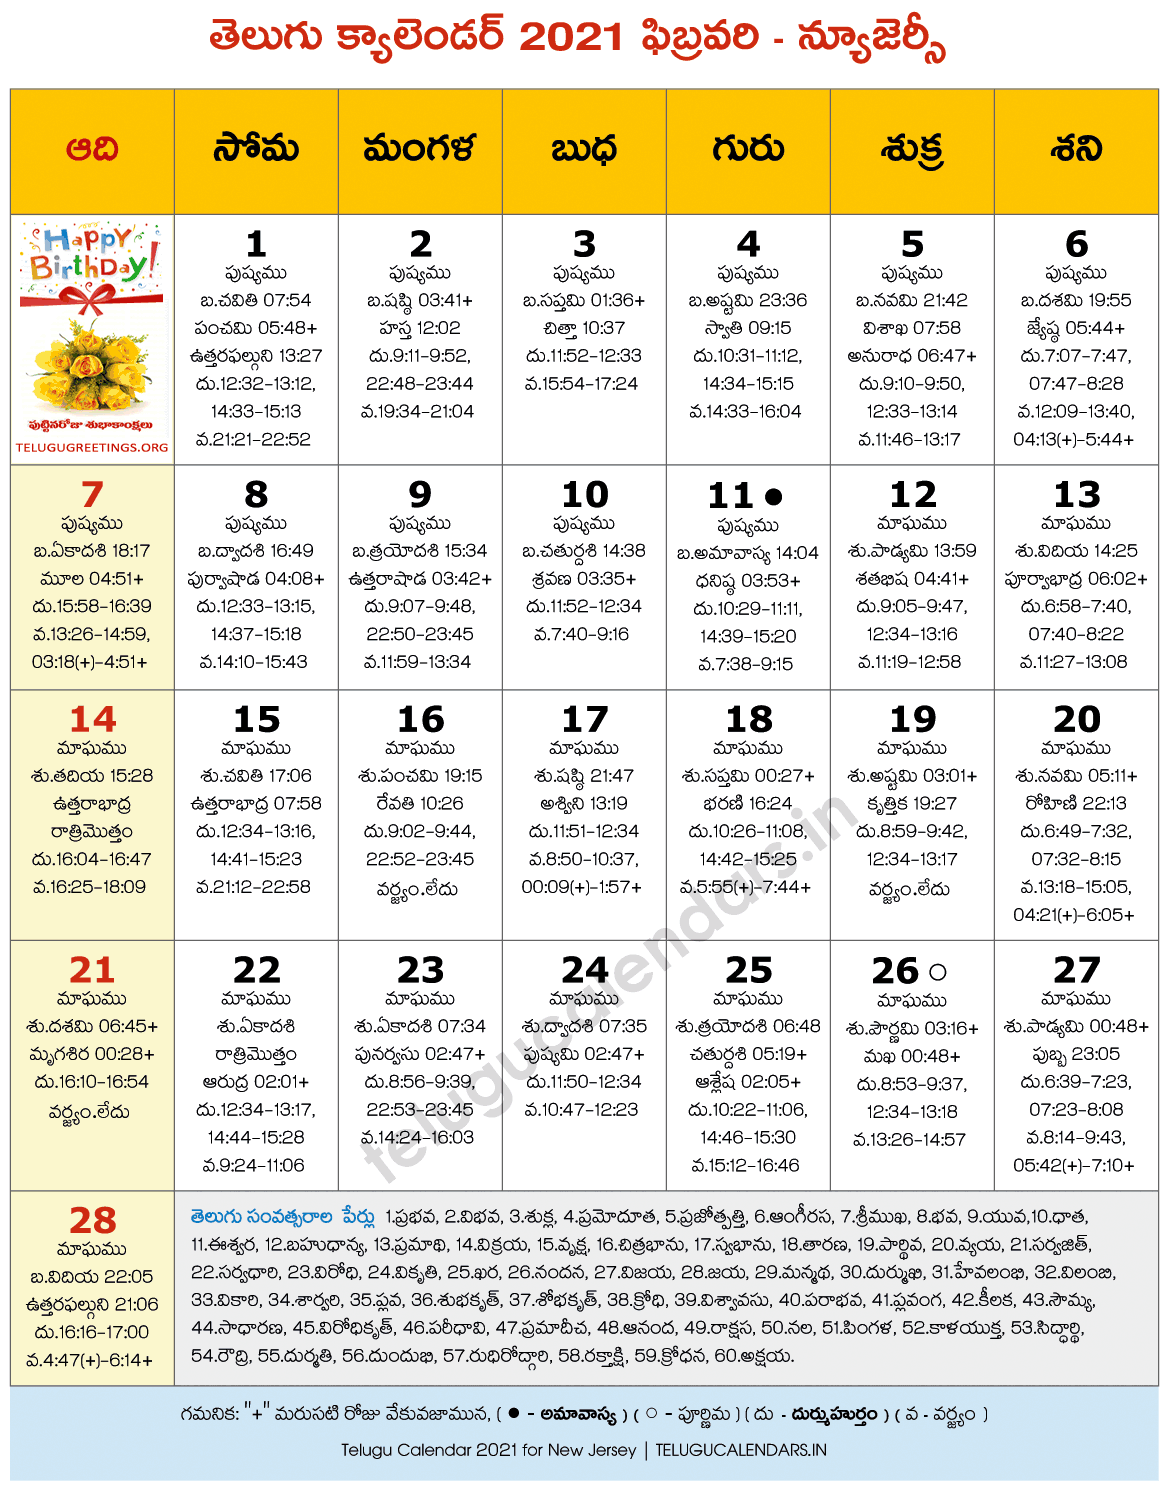 Telugu Calendar 2022 New Jersey New Jersey 2021 February Telugu Calendar - 2022 Telugu Calendar Pdf